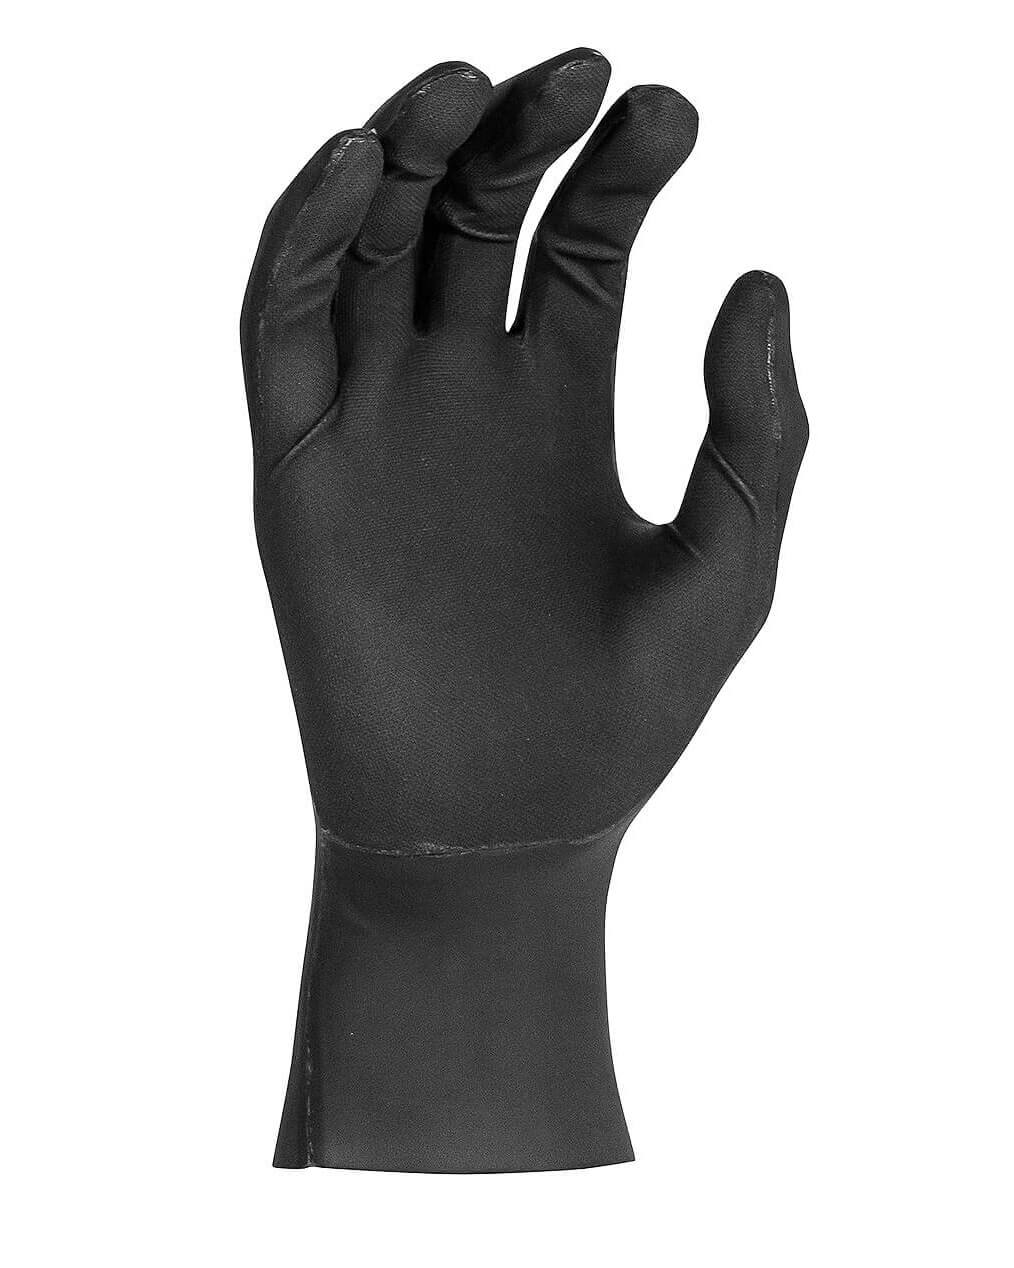 0.3mm XCEL INFINITI COMP Anti-Glove